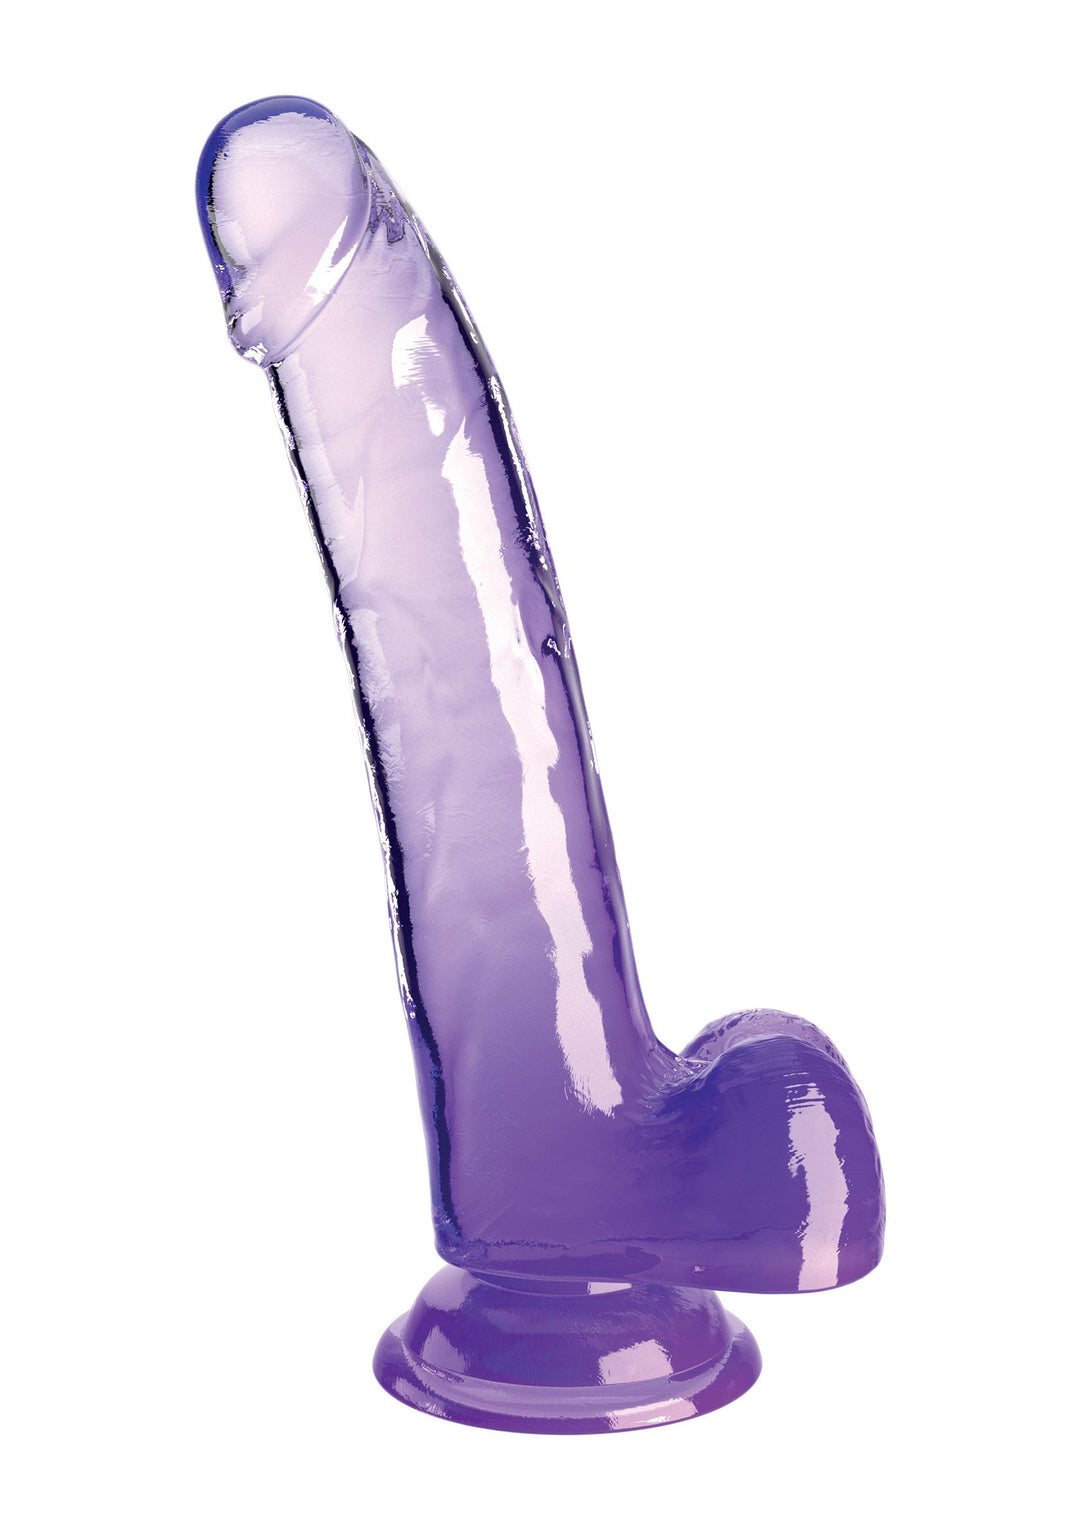 Realistic dildo King Cock clear Purple - 24.8cm